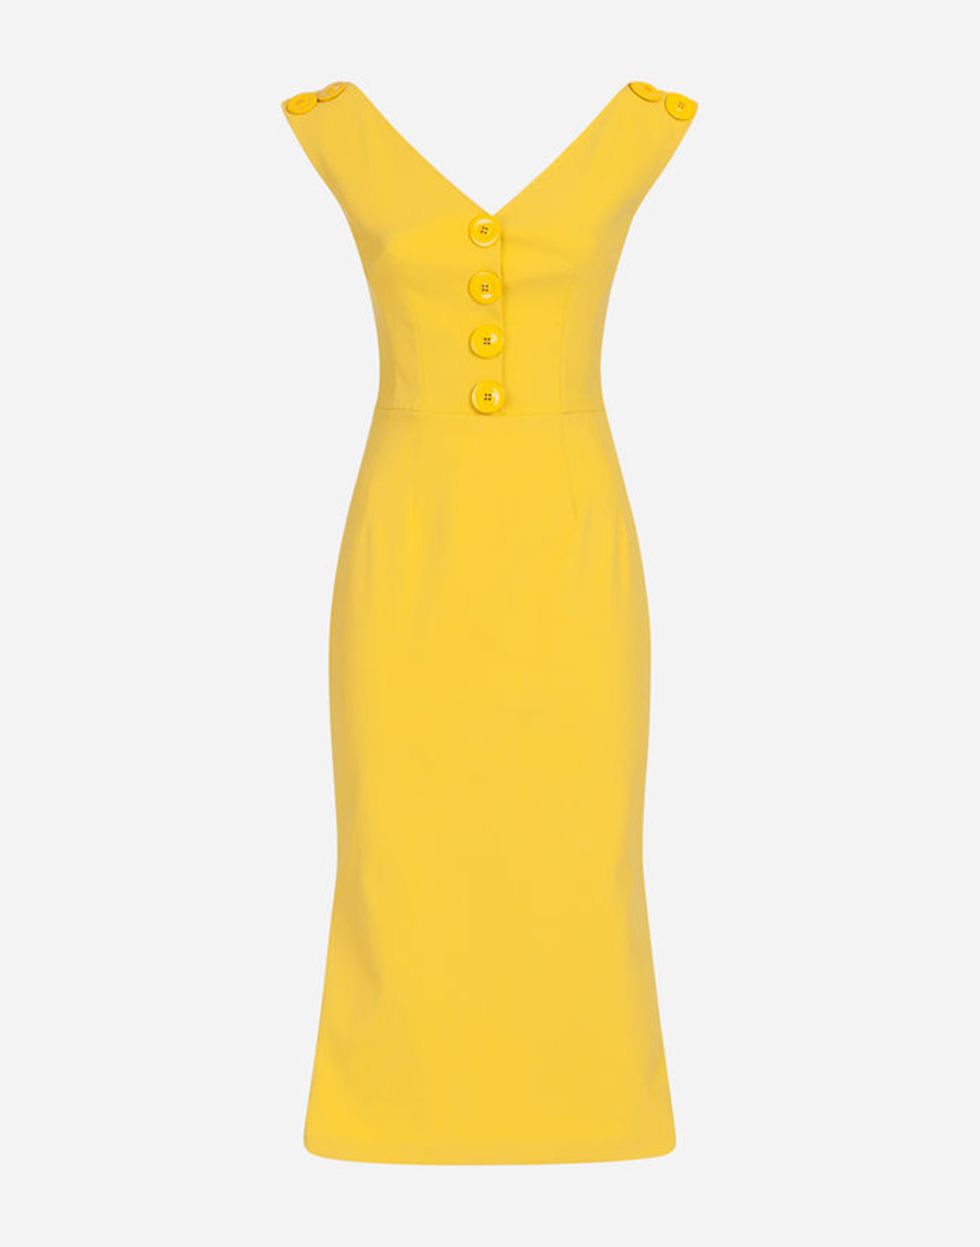 Clothing, Yellow, Dress, Day dress, Orange, Cocktail dress, Neck, Strapless dress, Sheath dress, 